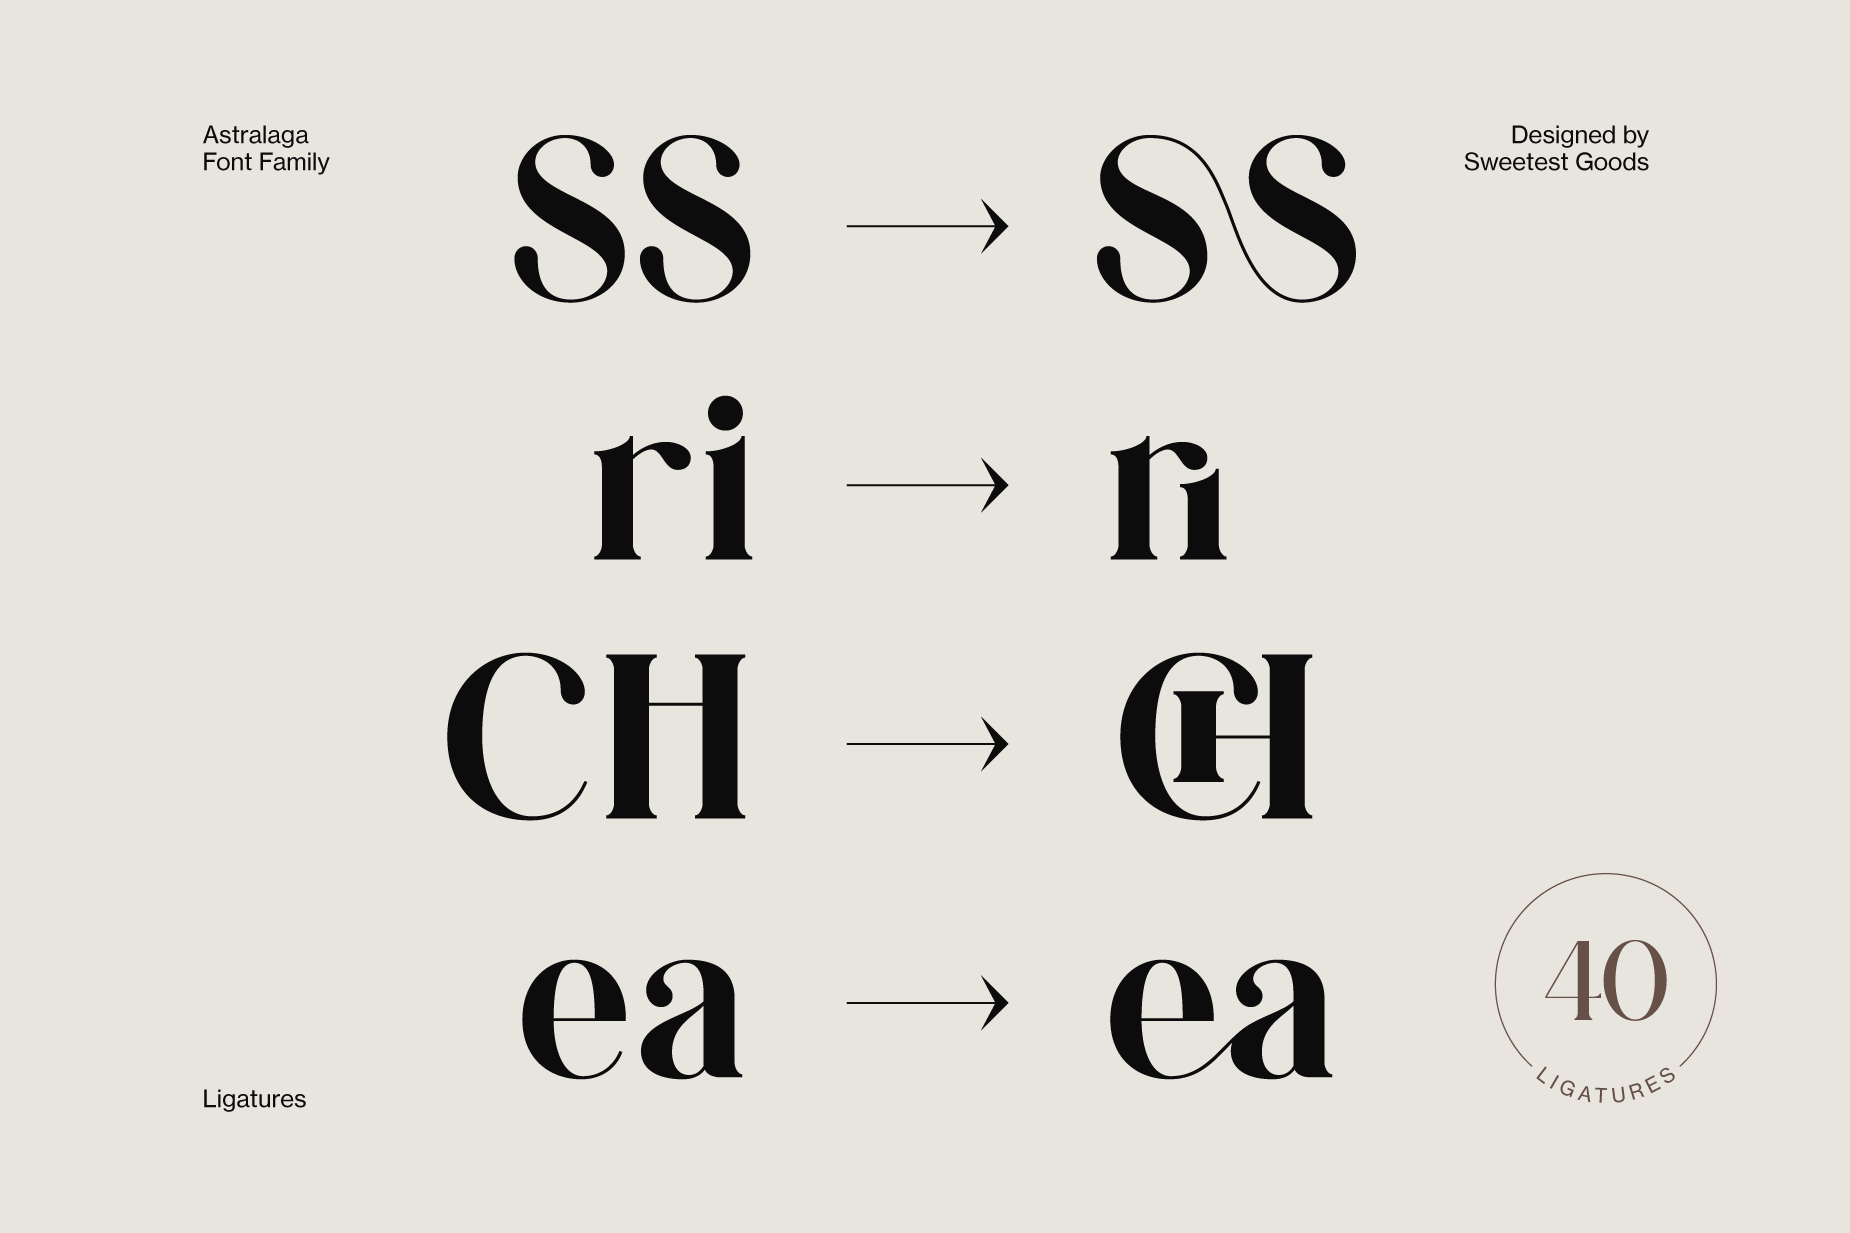 Ligatures - Astralaga Font Family - Typography Design